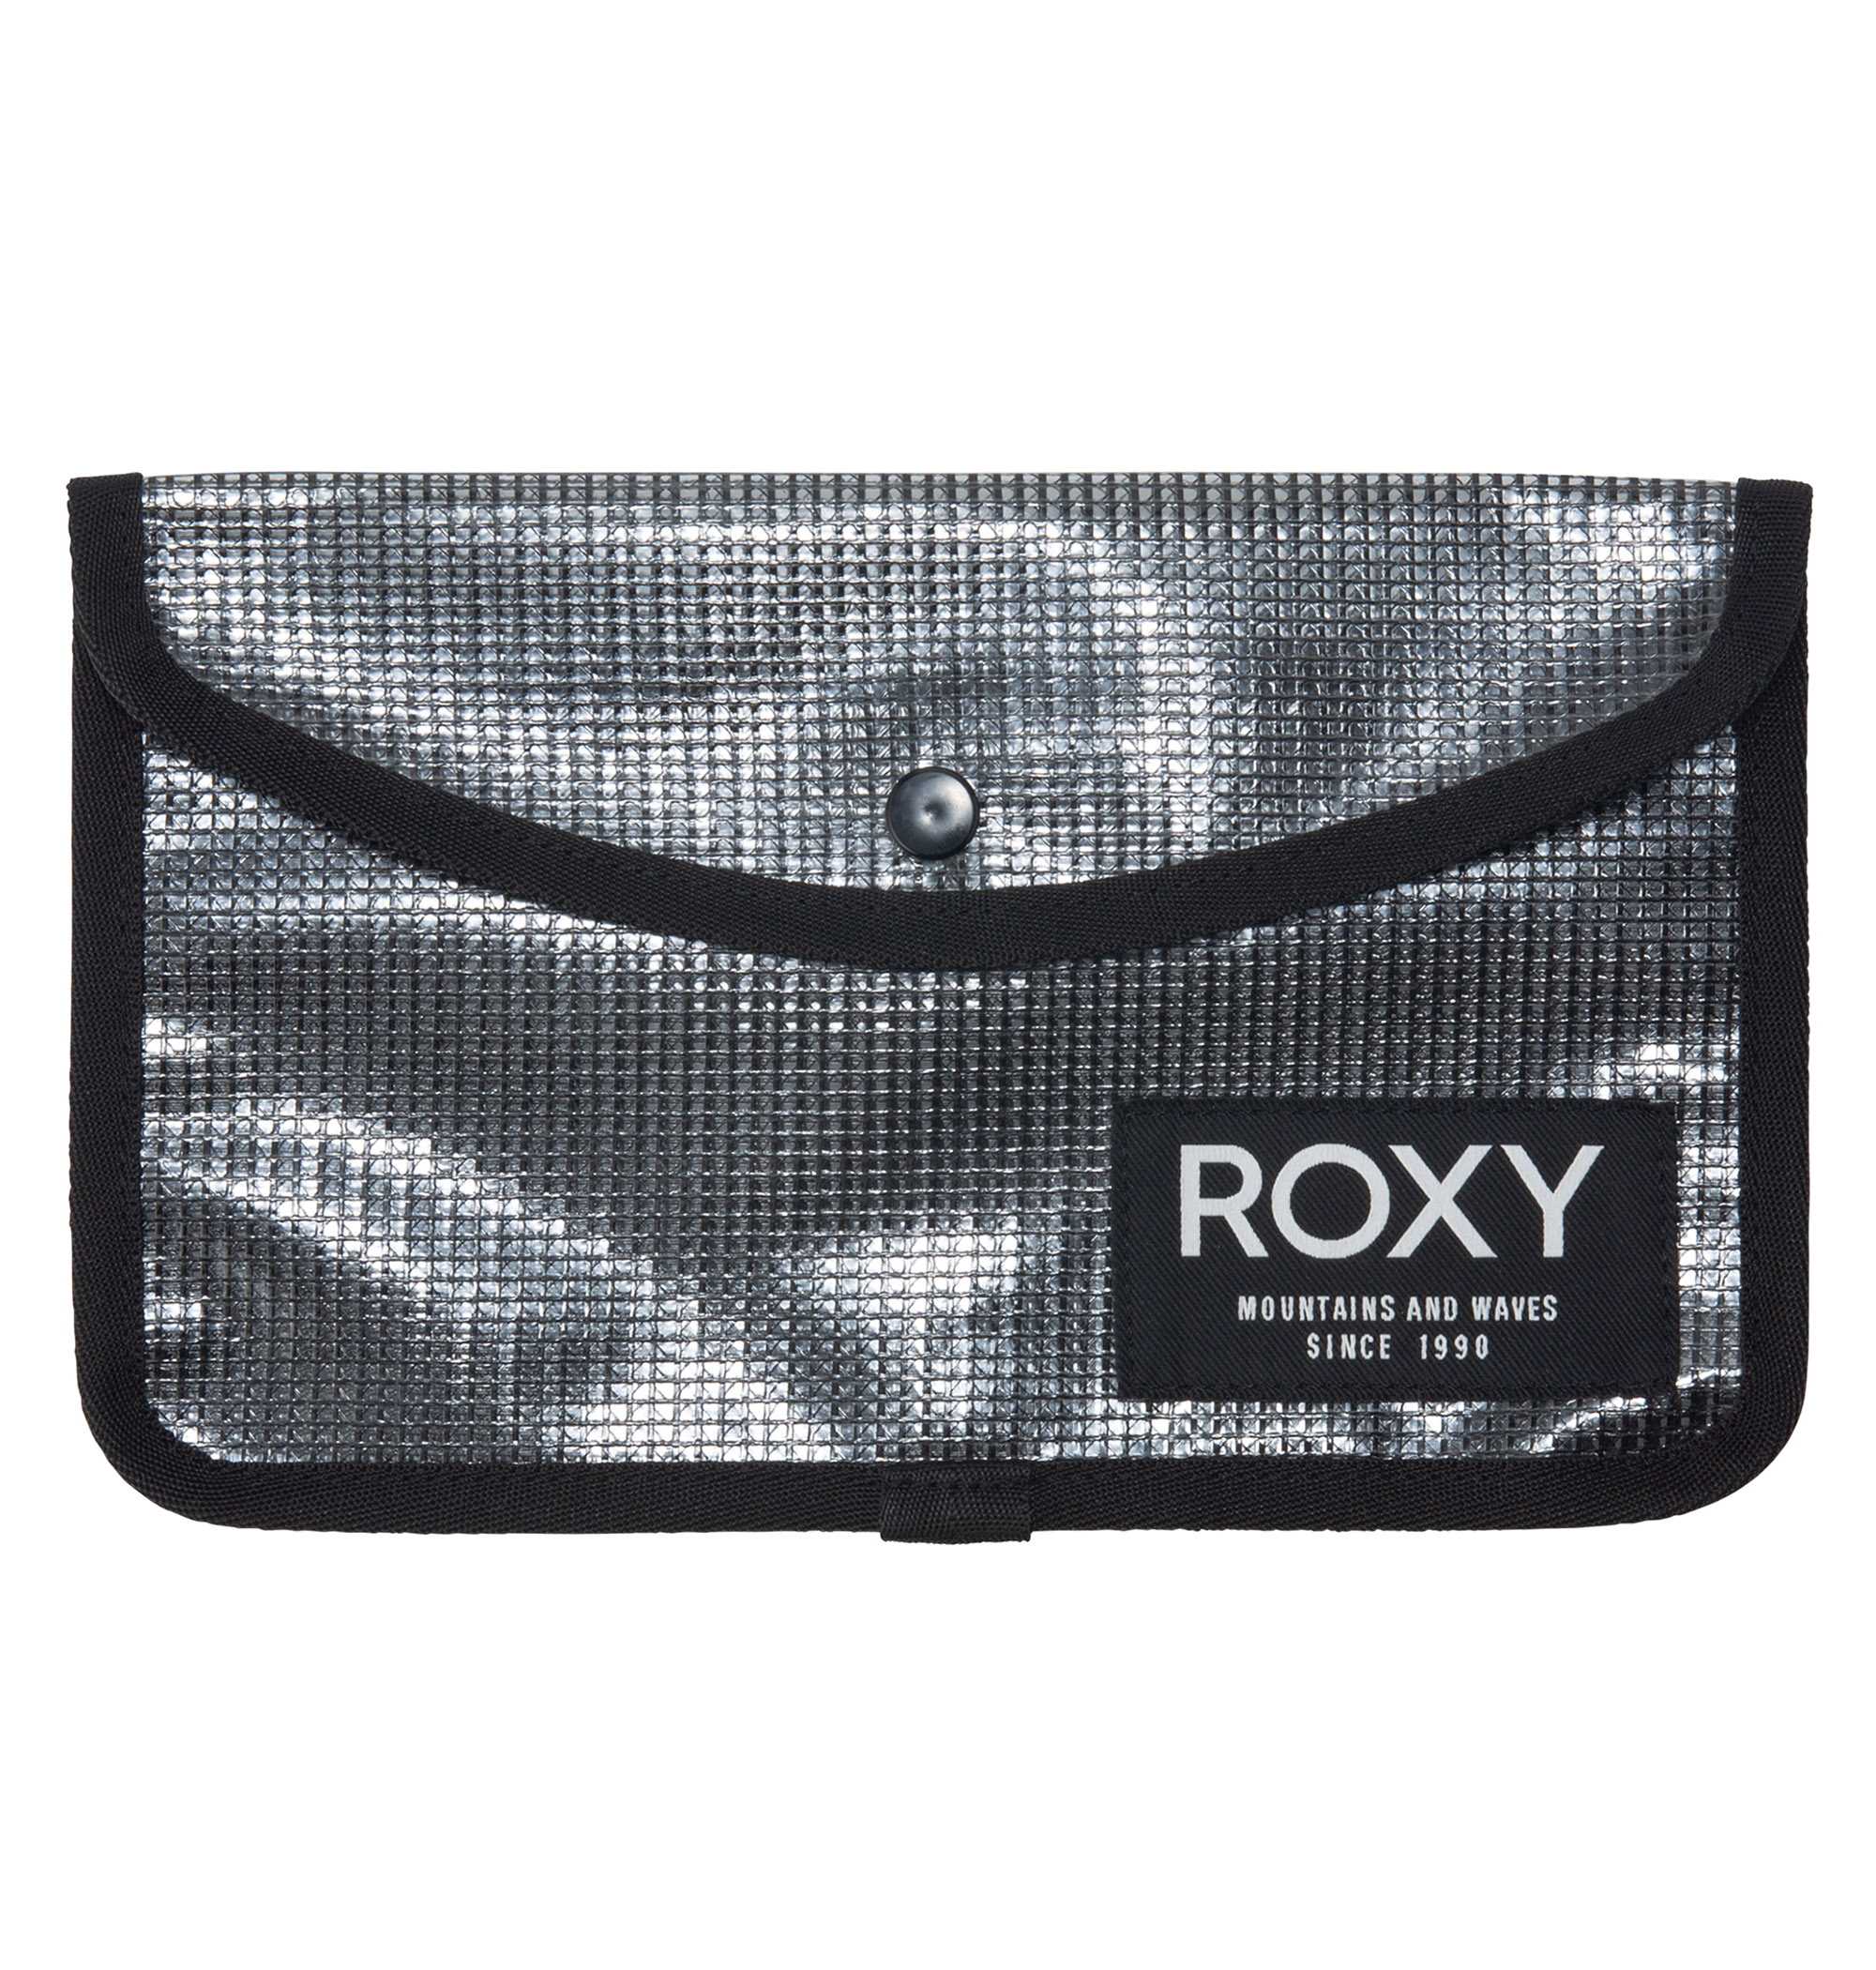 ＜Roxy＞ON THE DOT メッシュとビニールを合わせたミックスPVC素材で、クリアな清涼感を与えてくれるポーチ画像